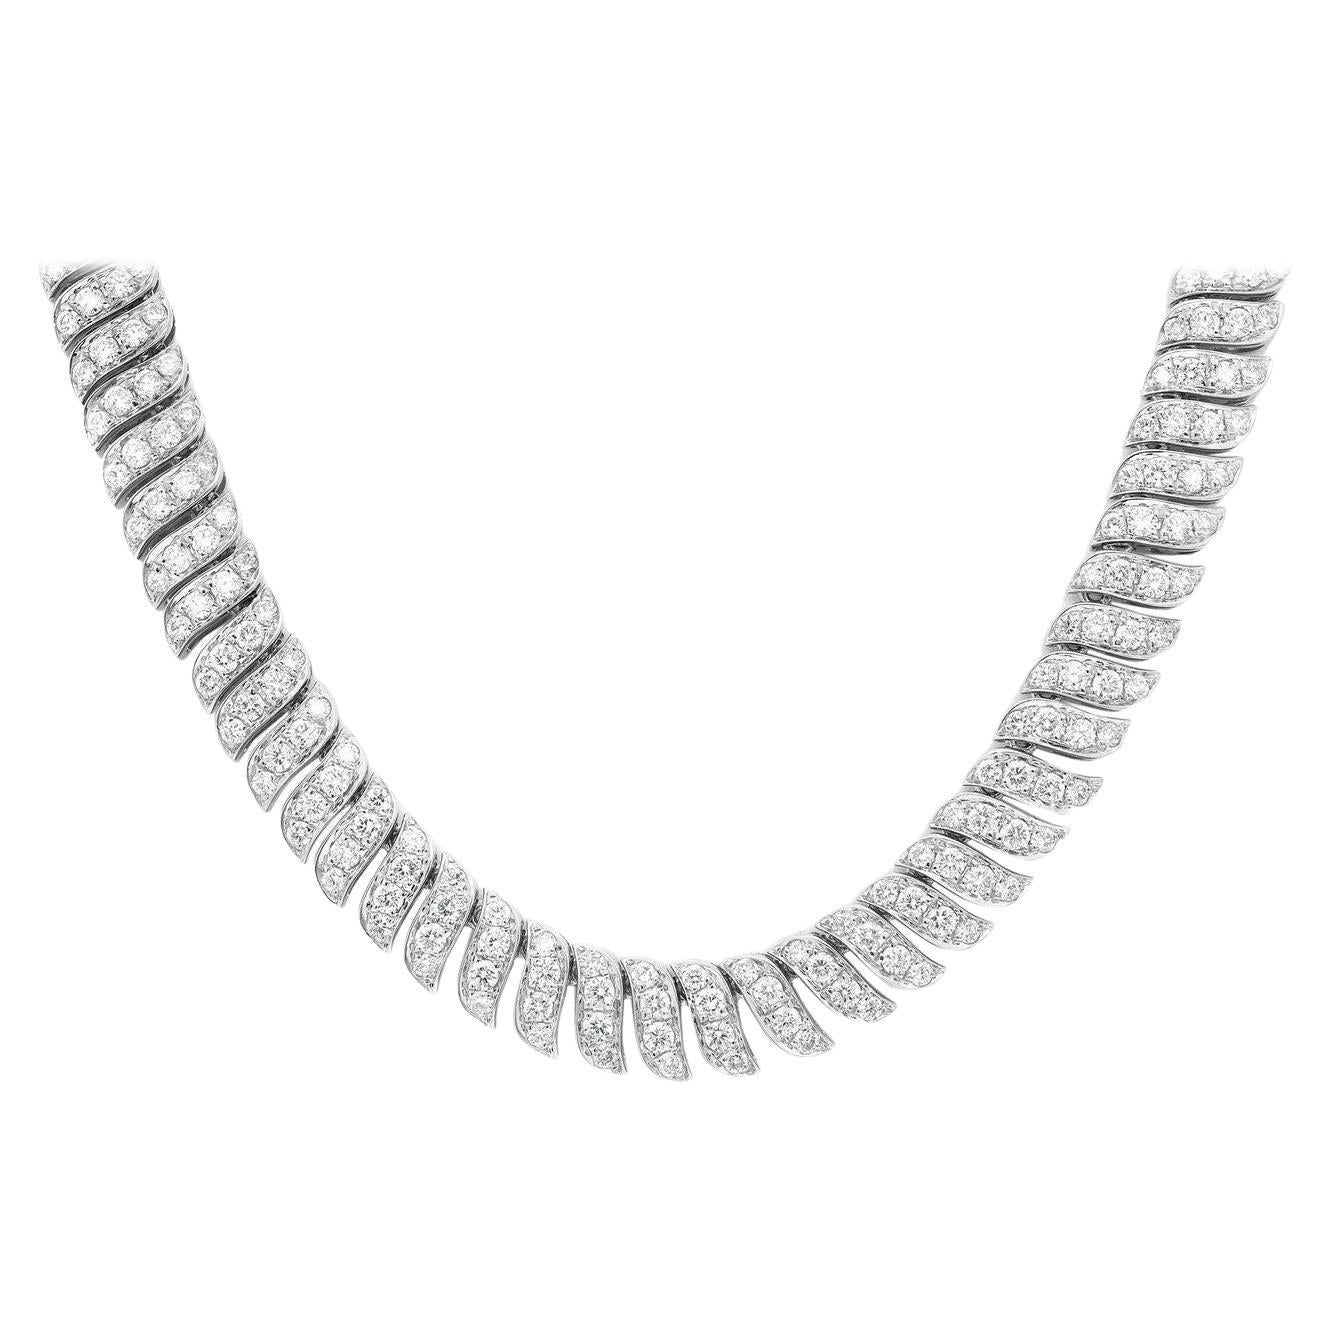 Elizabeth Fine Jewelry 8.33 Carat Round Cut Diamond Necklace 18K White Gold For Sale